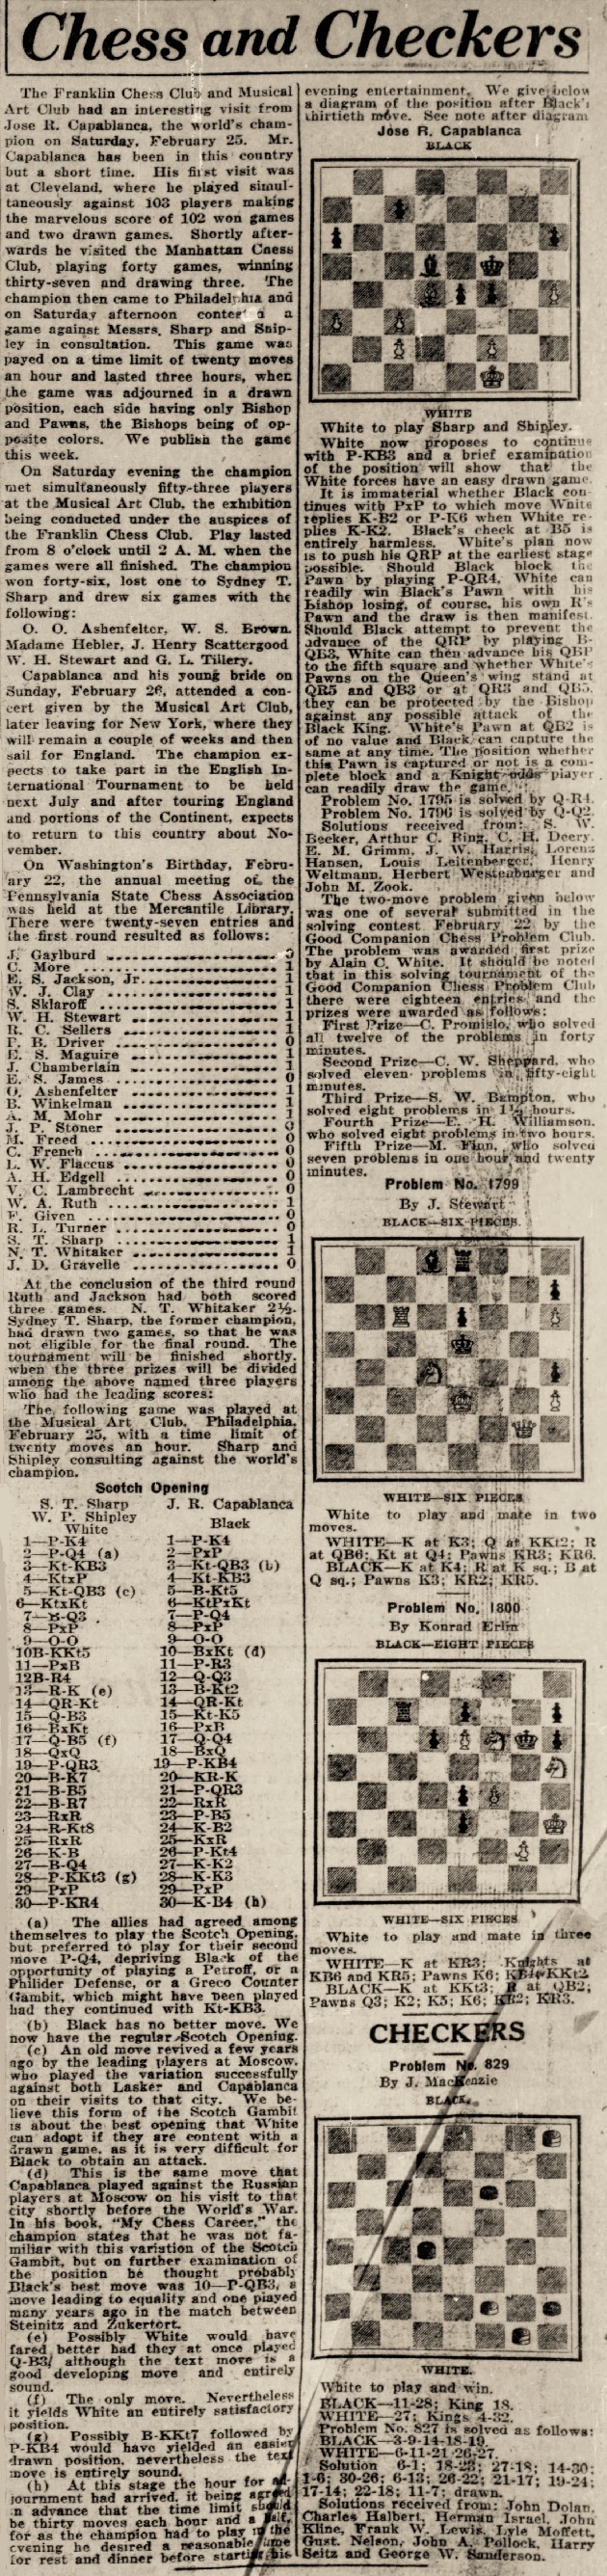 Jose Raul Capablanca vs Walter Penn Shipley - Philadelphia (1924